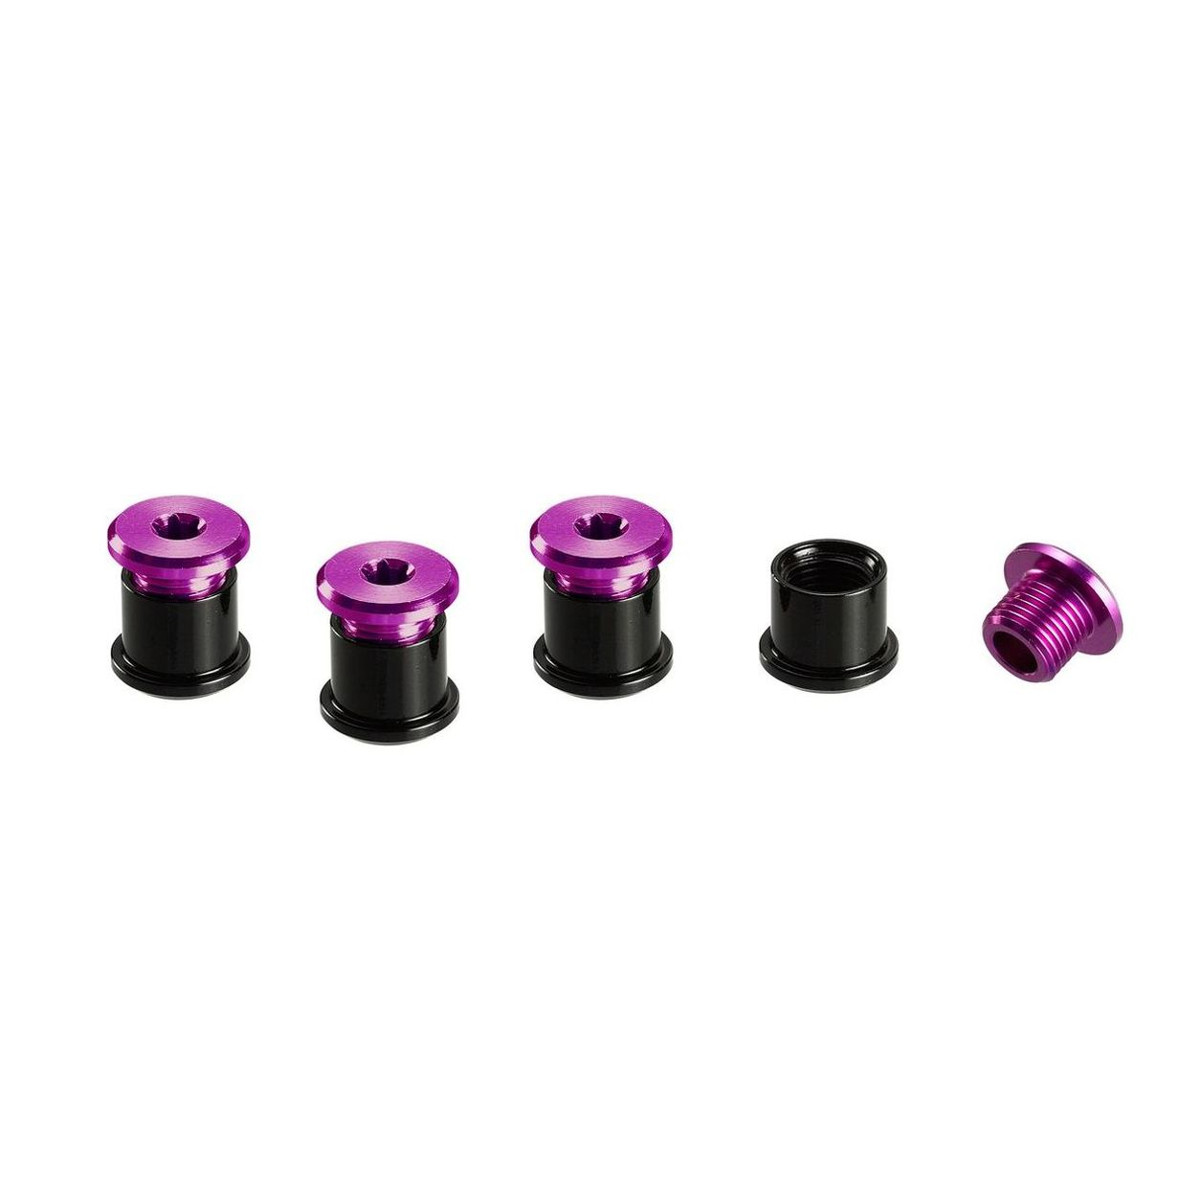 E*thirteen Chainring Bolts  Purple, Aluminium, T25 6 mm Screws/ T30 7,5 mm Nuts, 4 pcs each